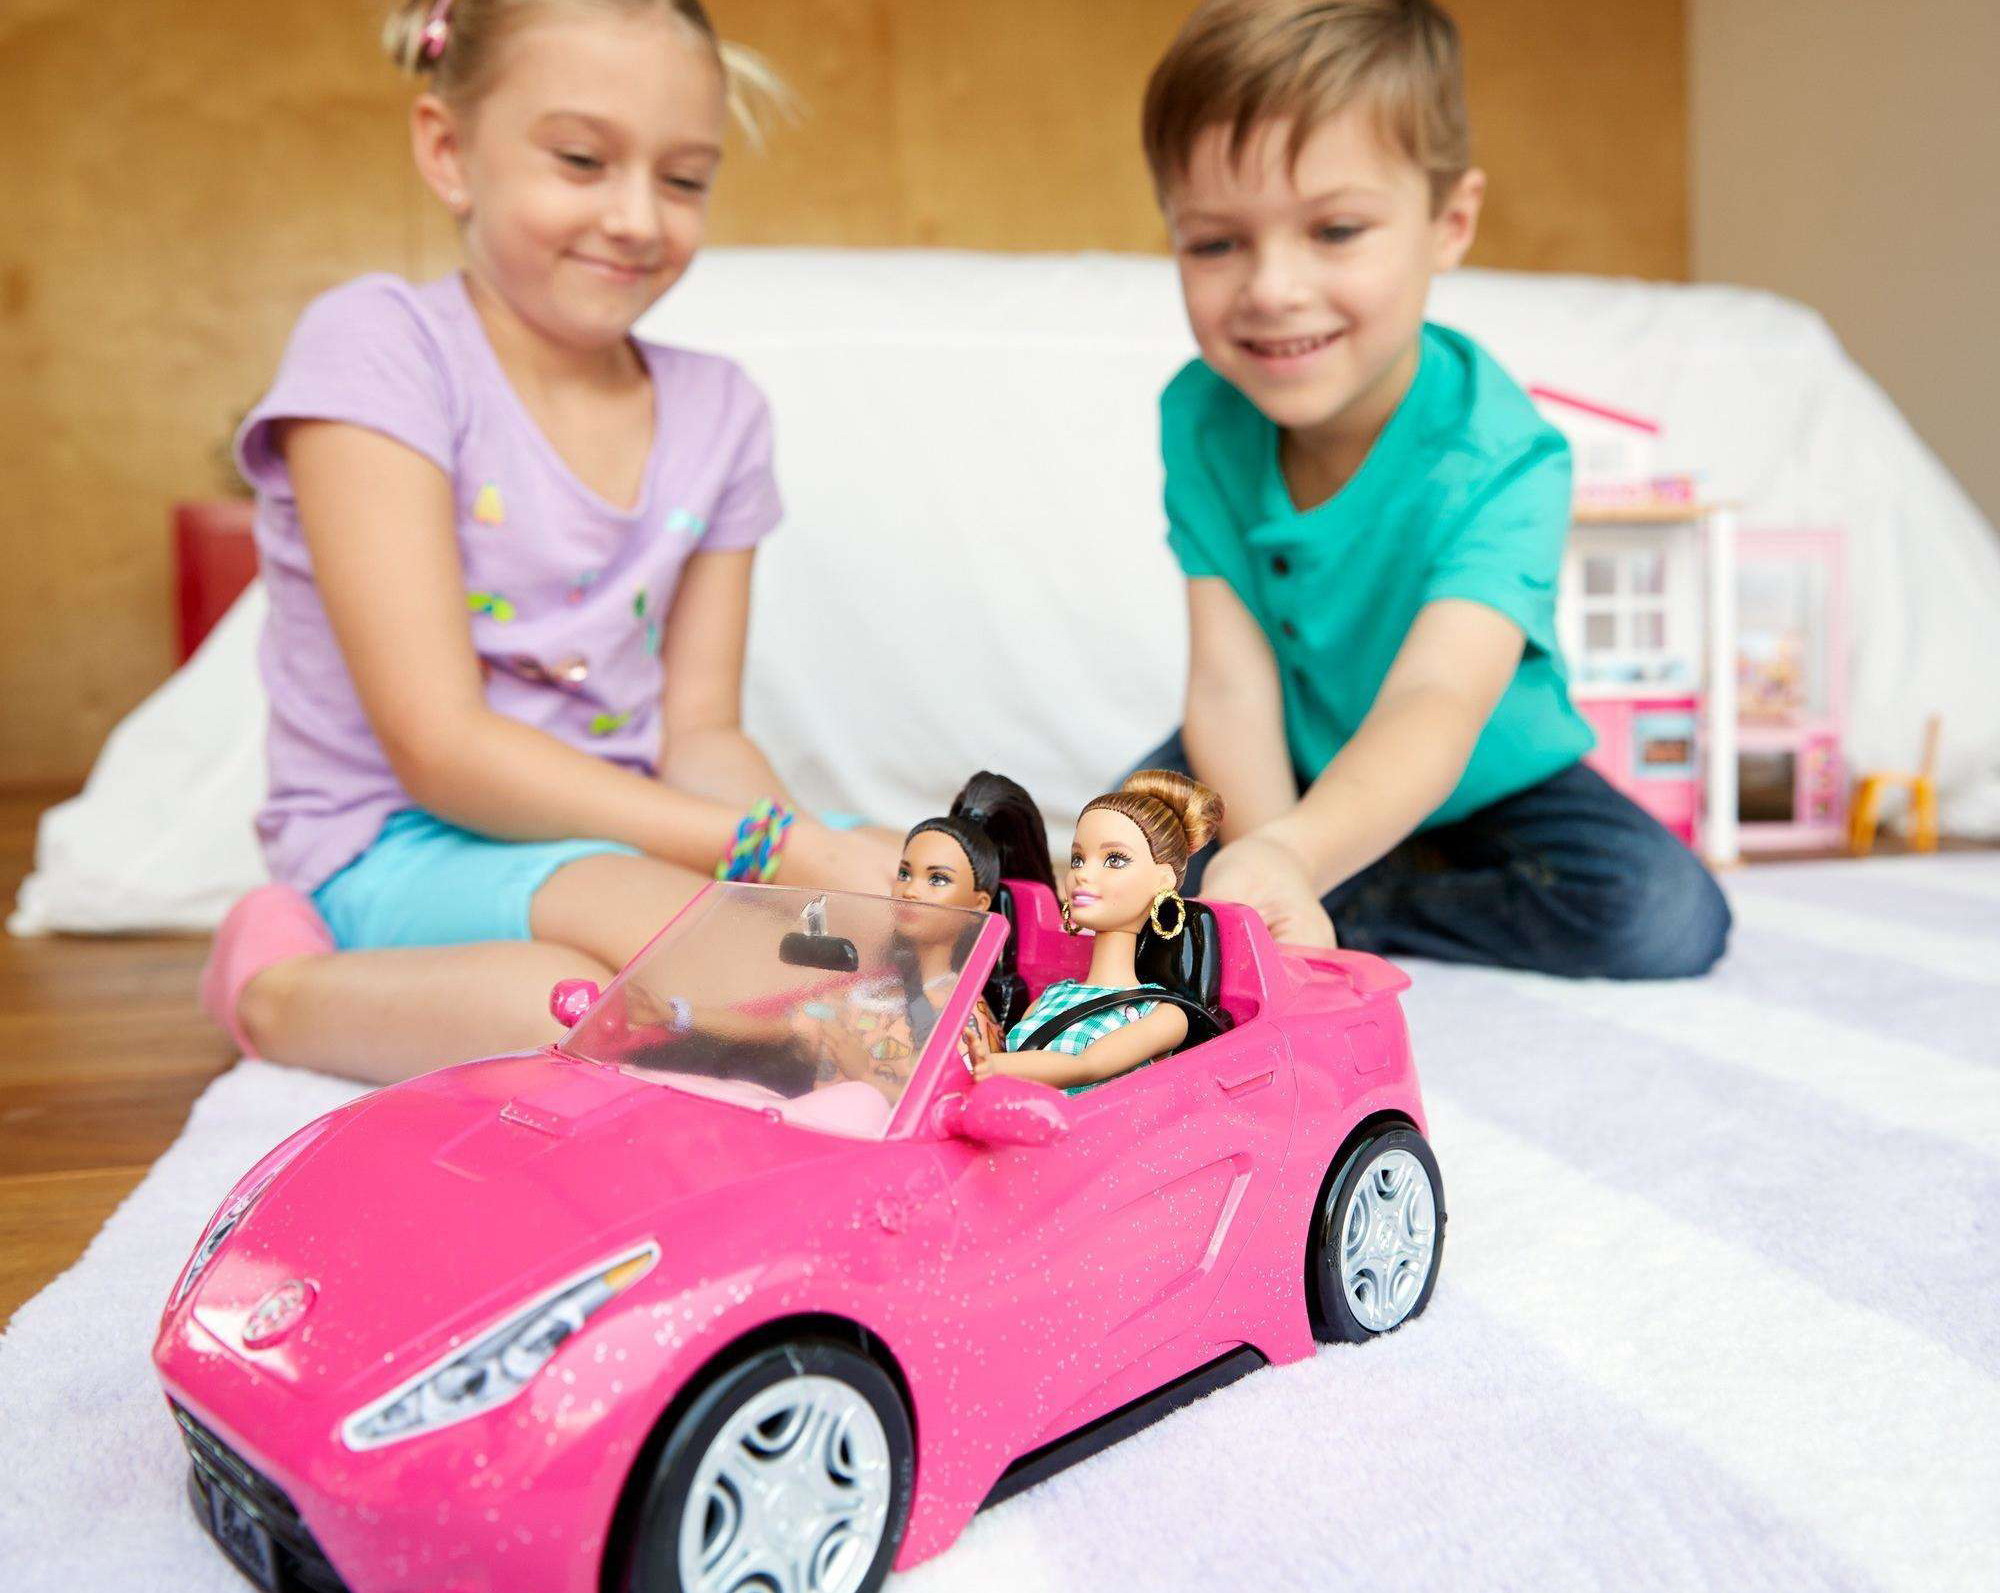 barbie cars walmart